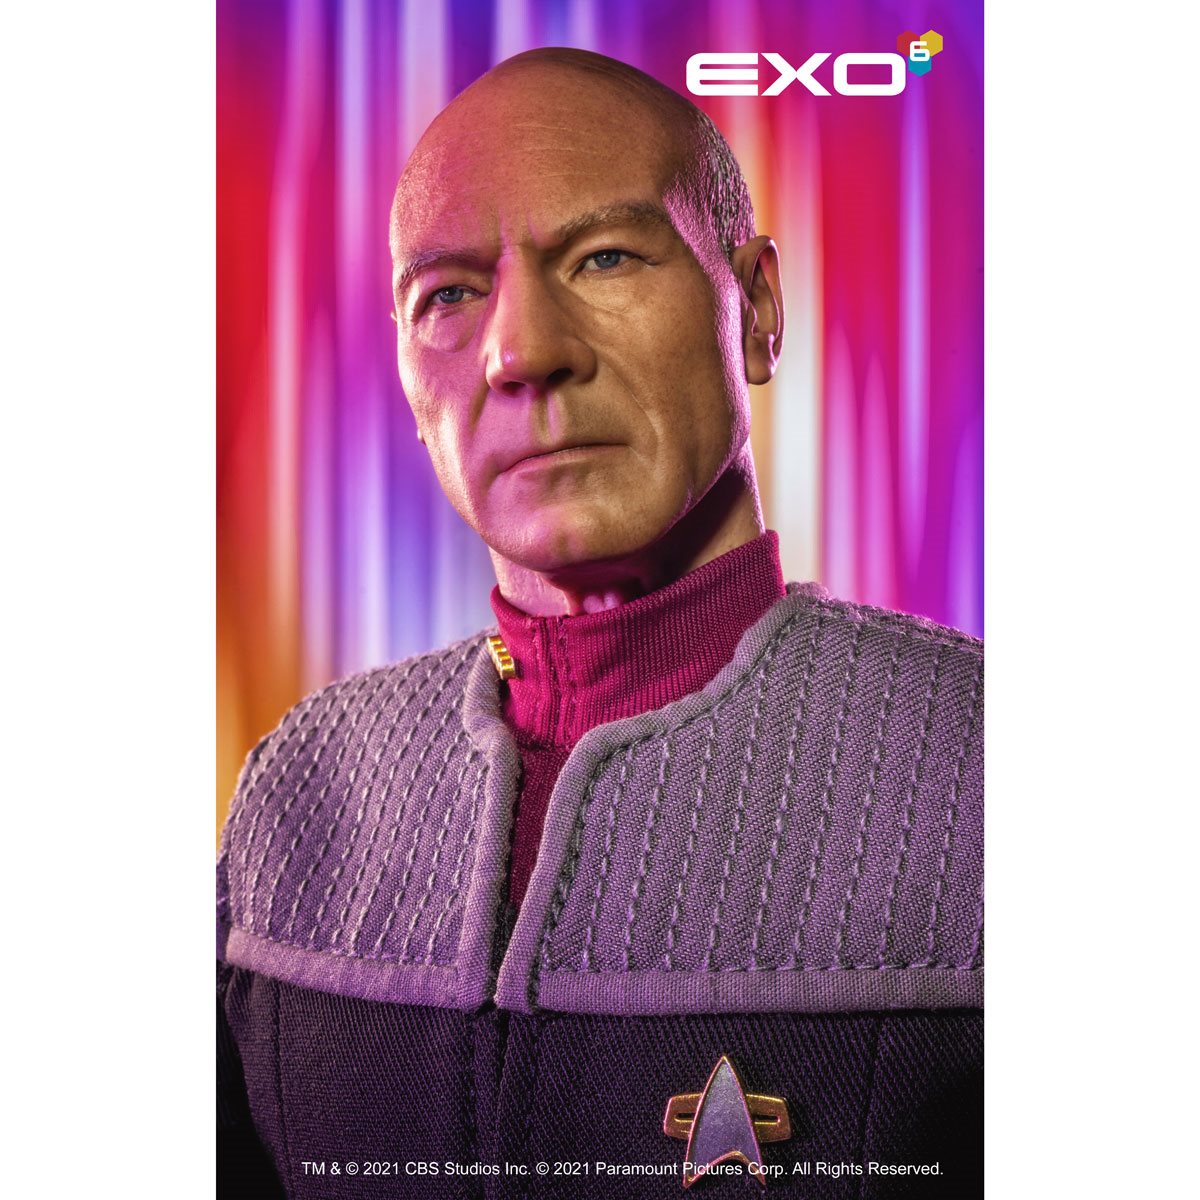 Bandai Star Trek Figure Captain Jean-Luc Picard | 5'' Captain Picard Star  Trek The Next Generation Action Figure | Star Trek TNG Toy Articulated